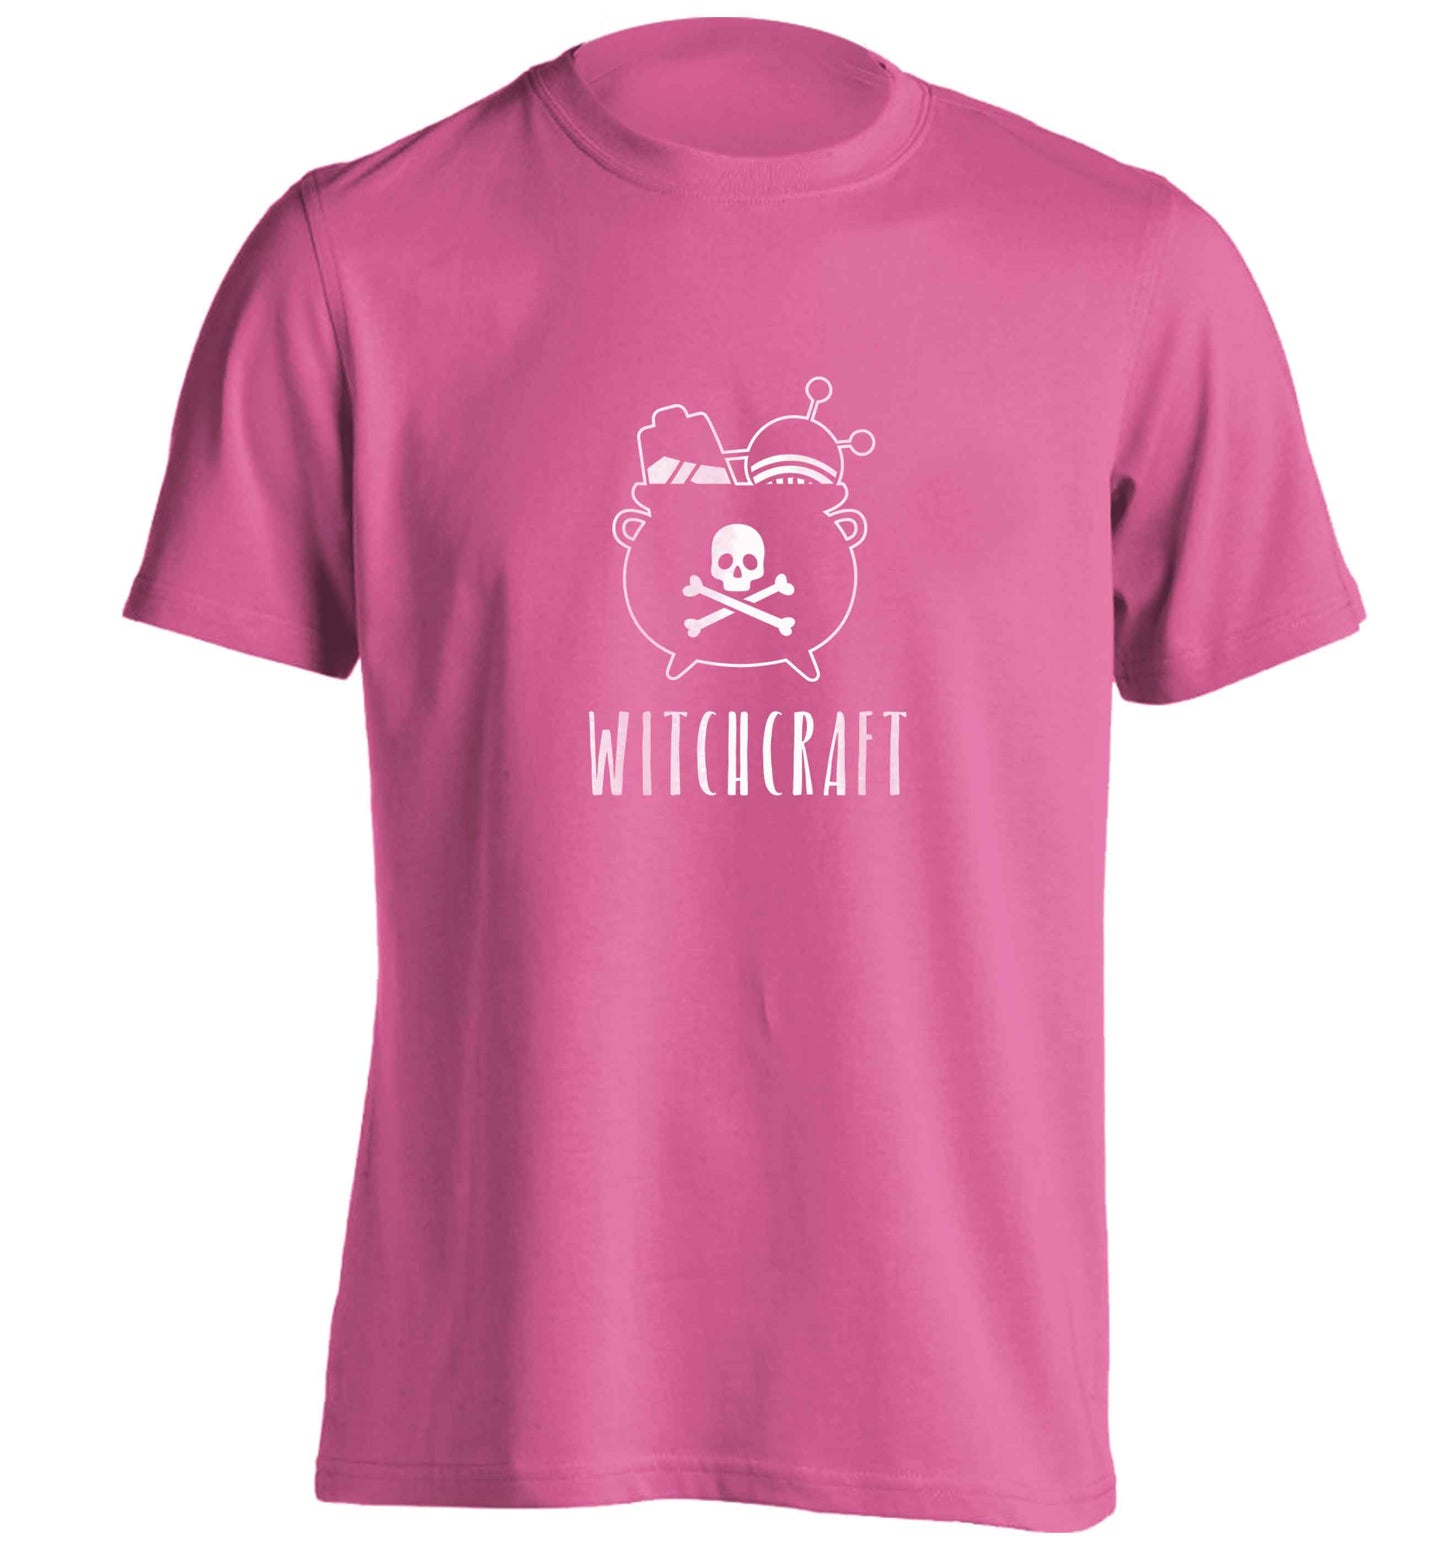 Witchcraft adults unisex pink Tshirt 2XL